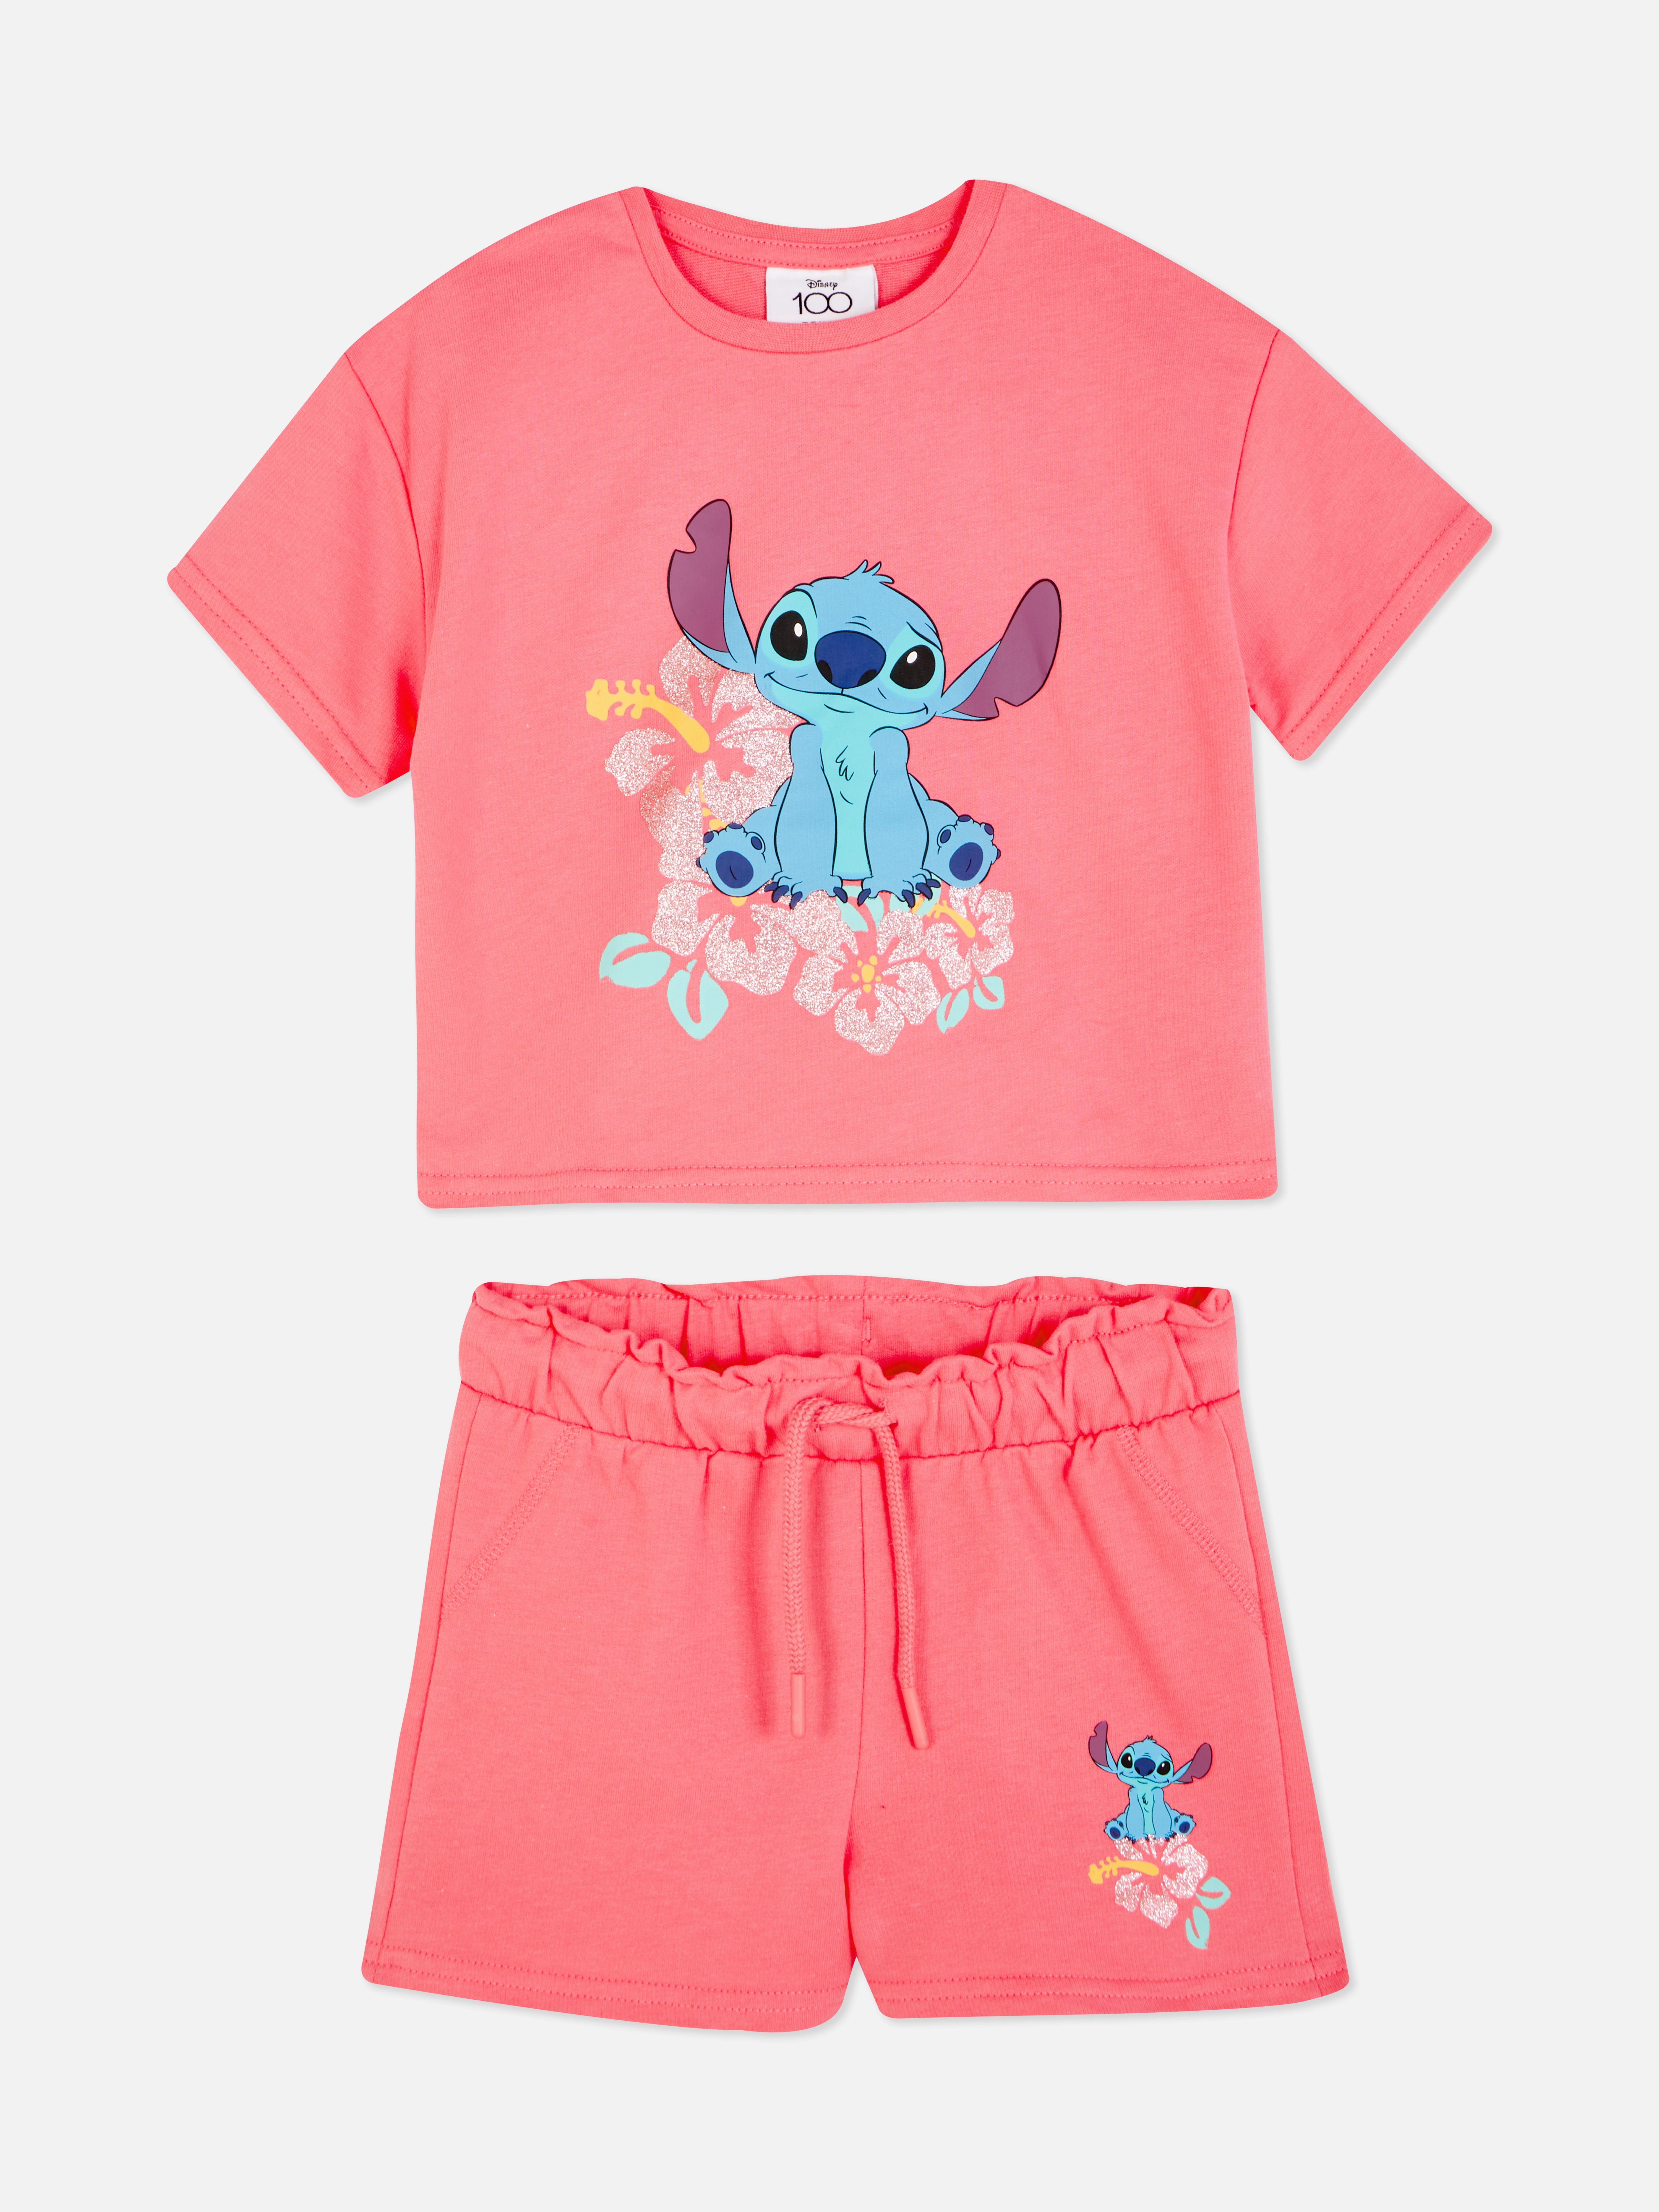 Disney’s Lilo & Stitch Originals Top and Shorts Co-ord